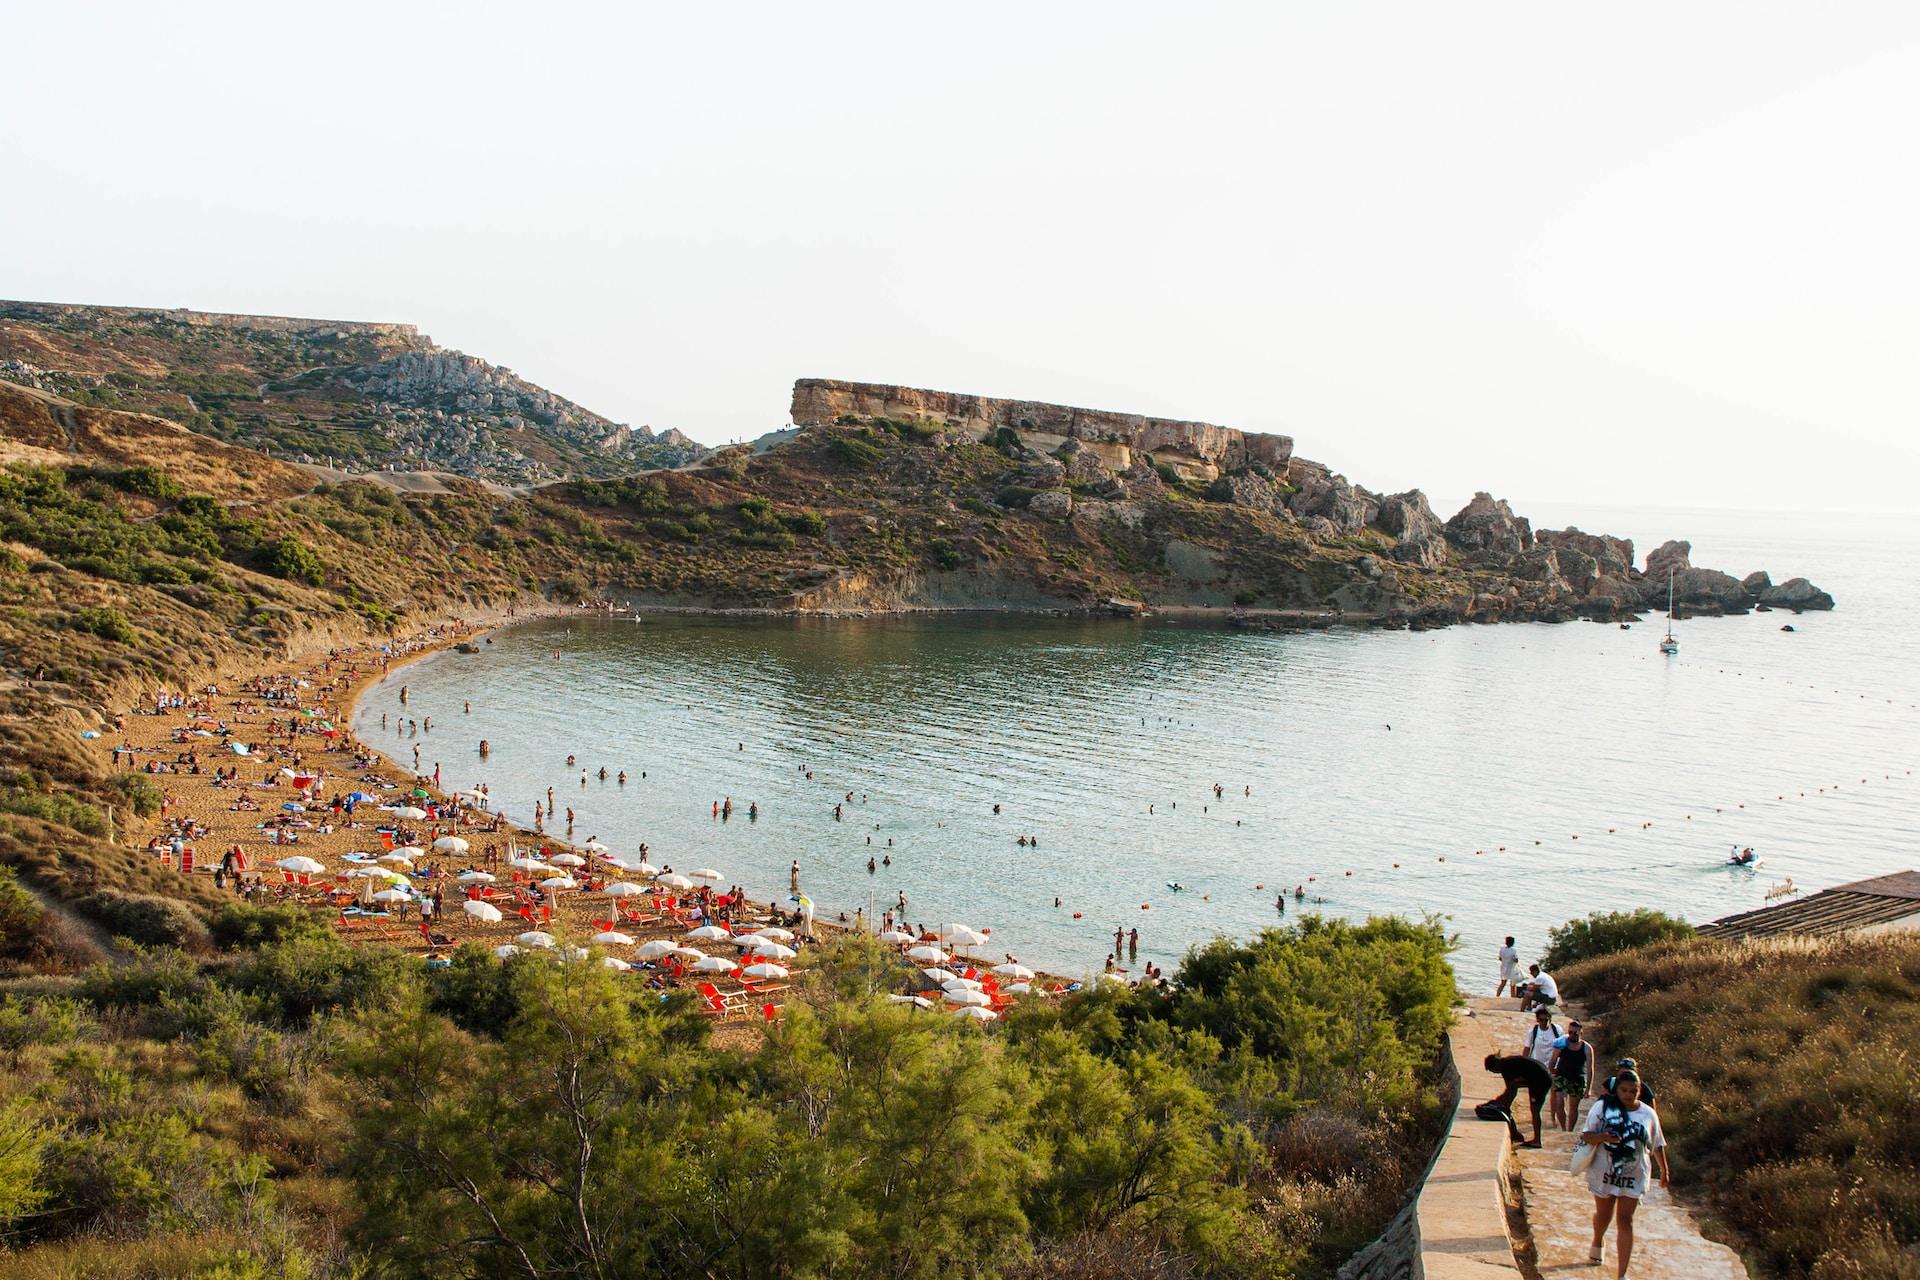 Malta: Riviera Beach with people.